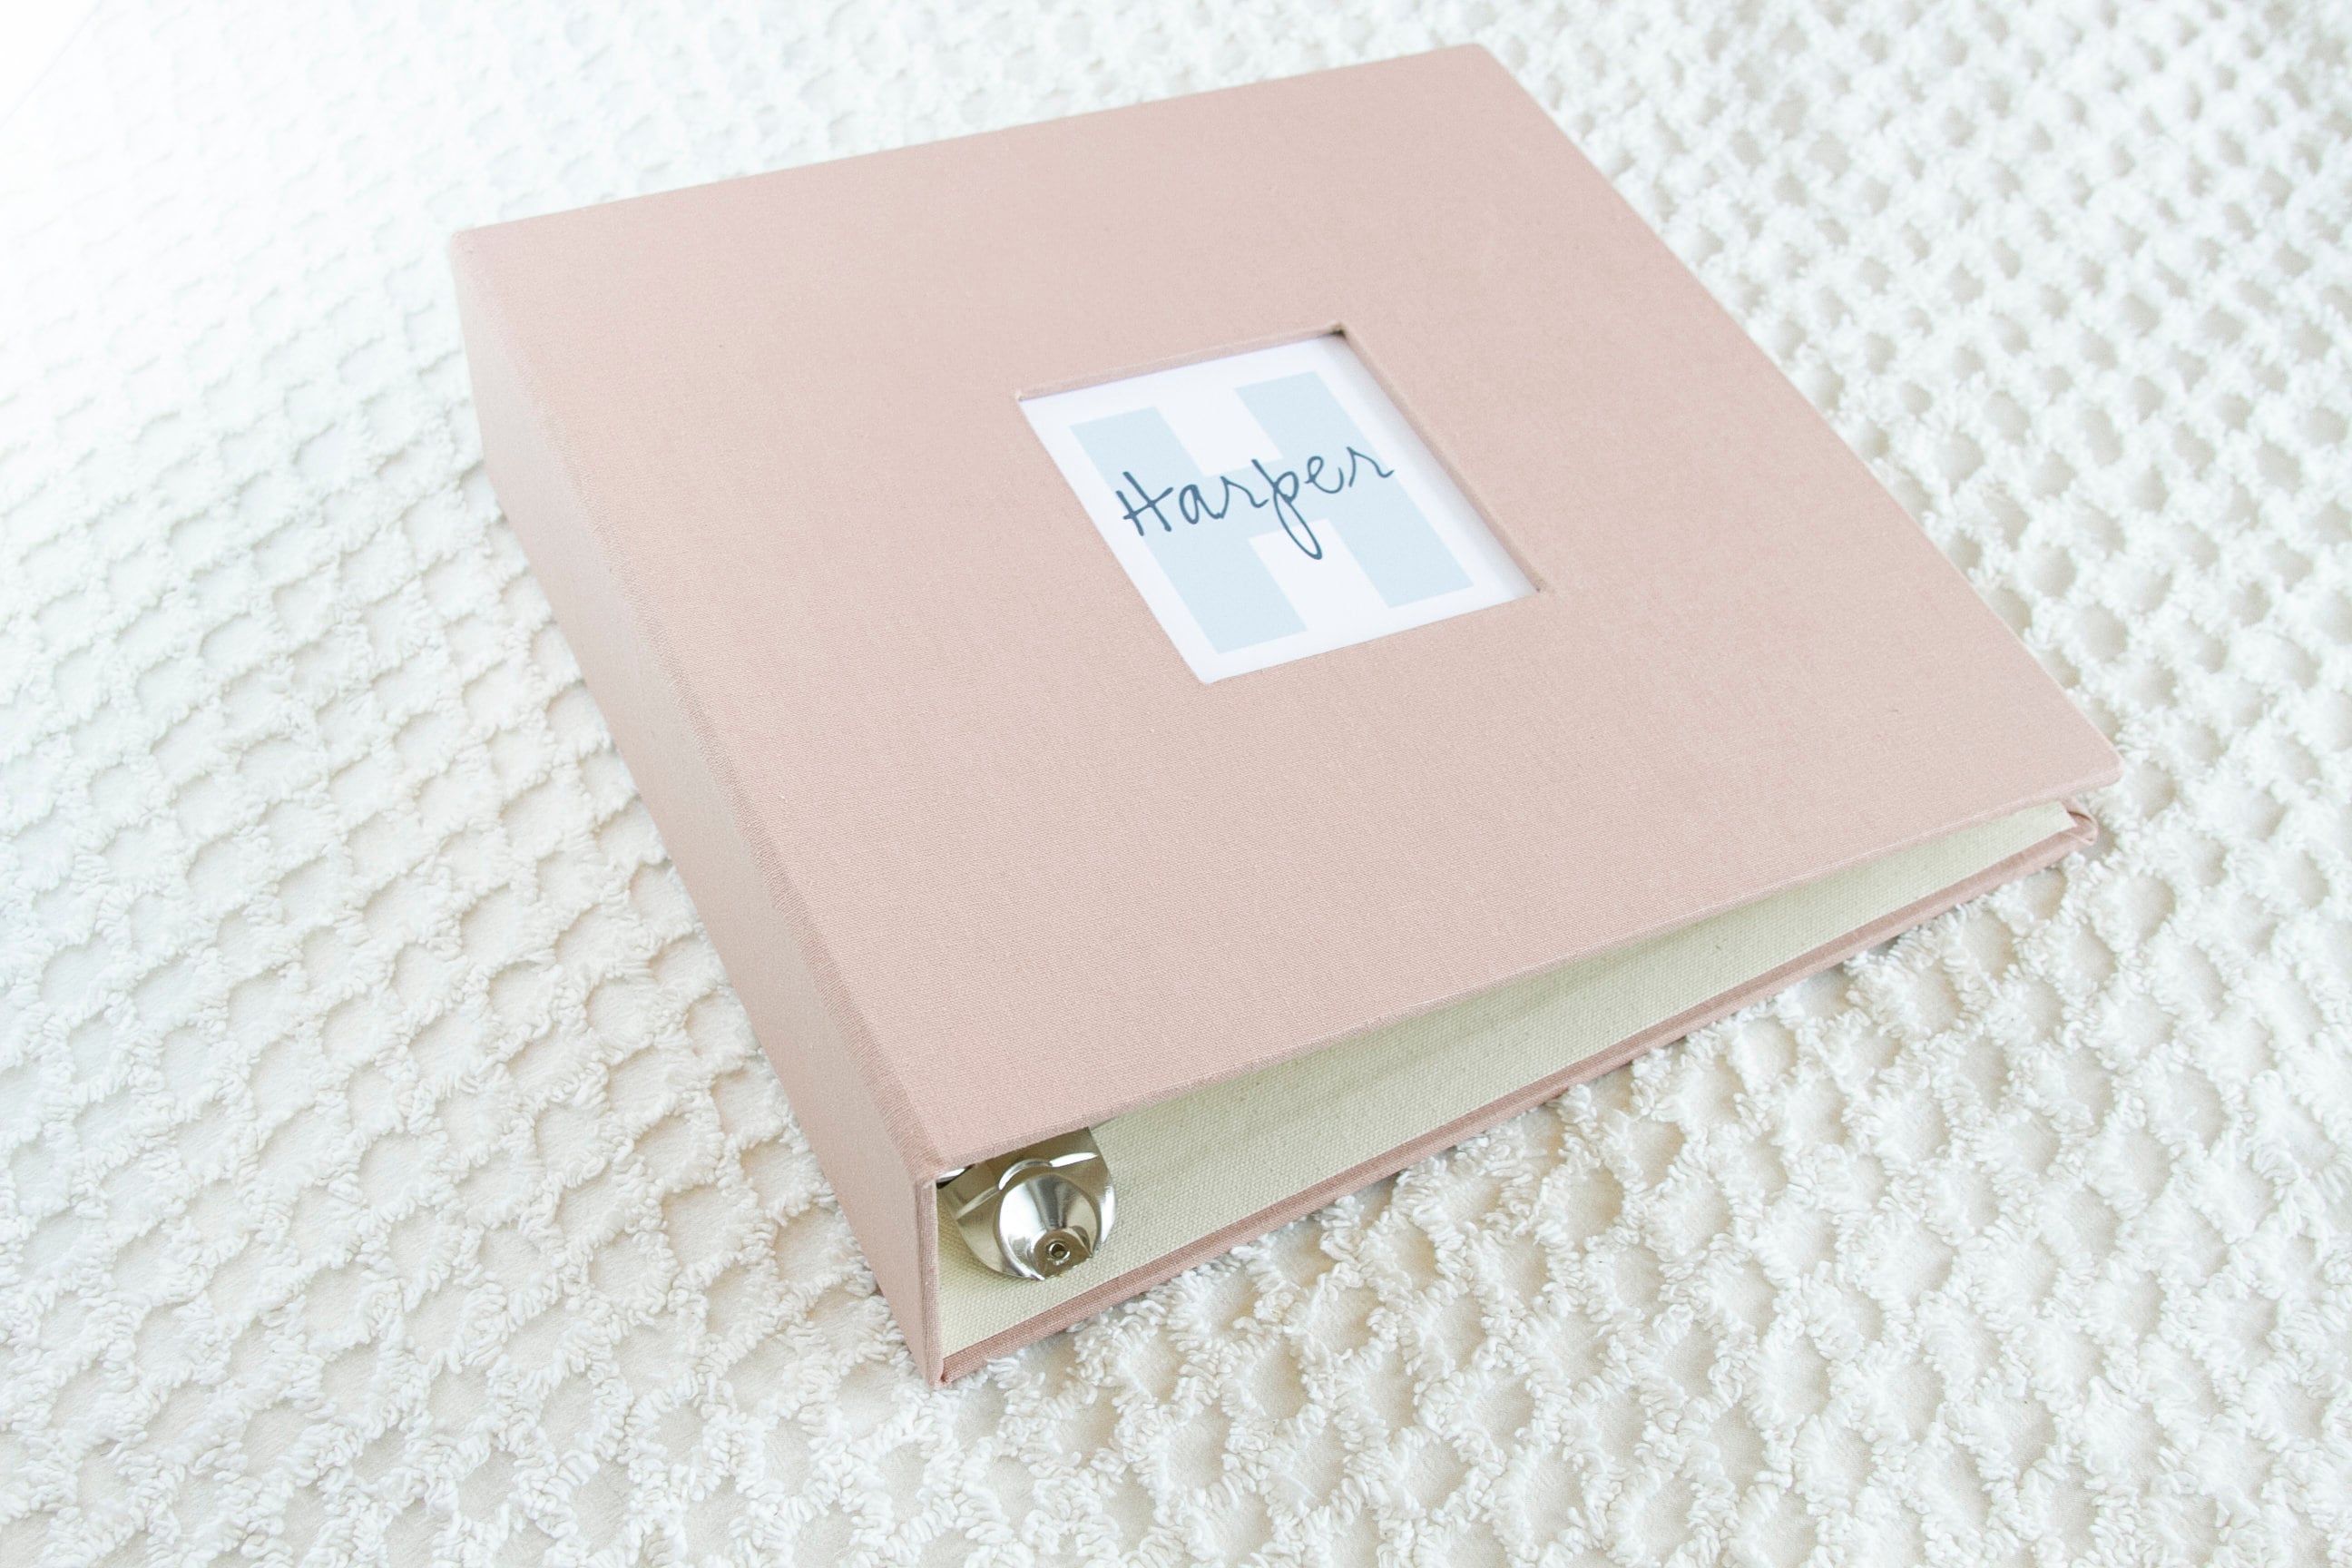 Personalized 12x12 Album, Scrapbook, Memory Book, or Presentation Book, 3  Ring Binder with 2 Rings